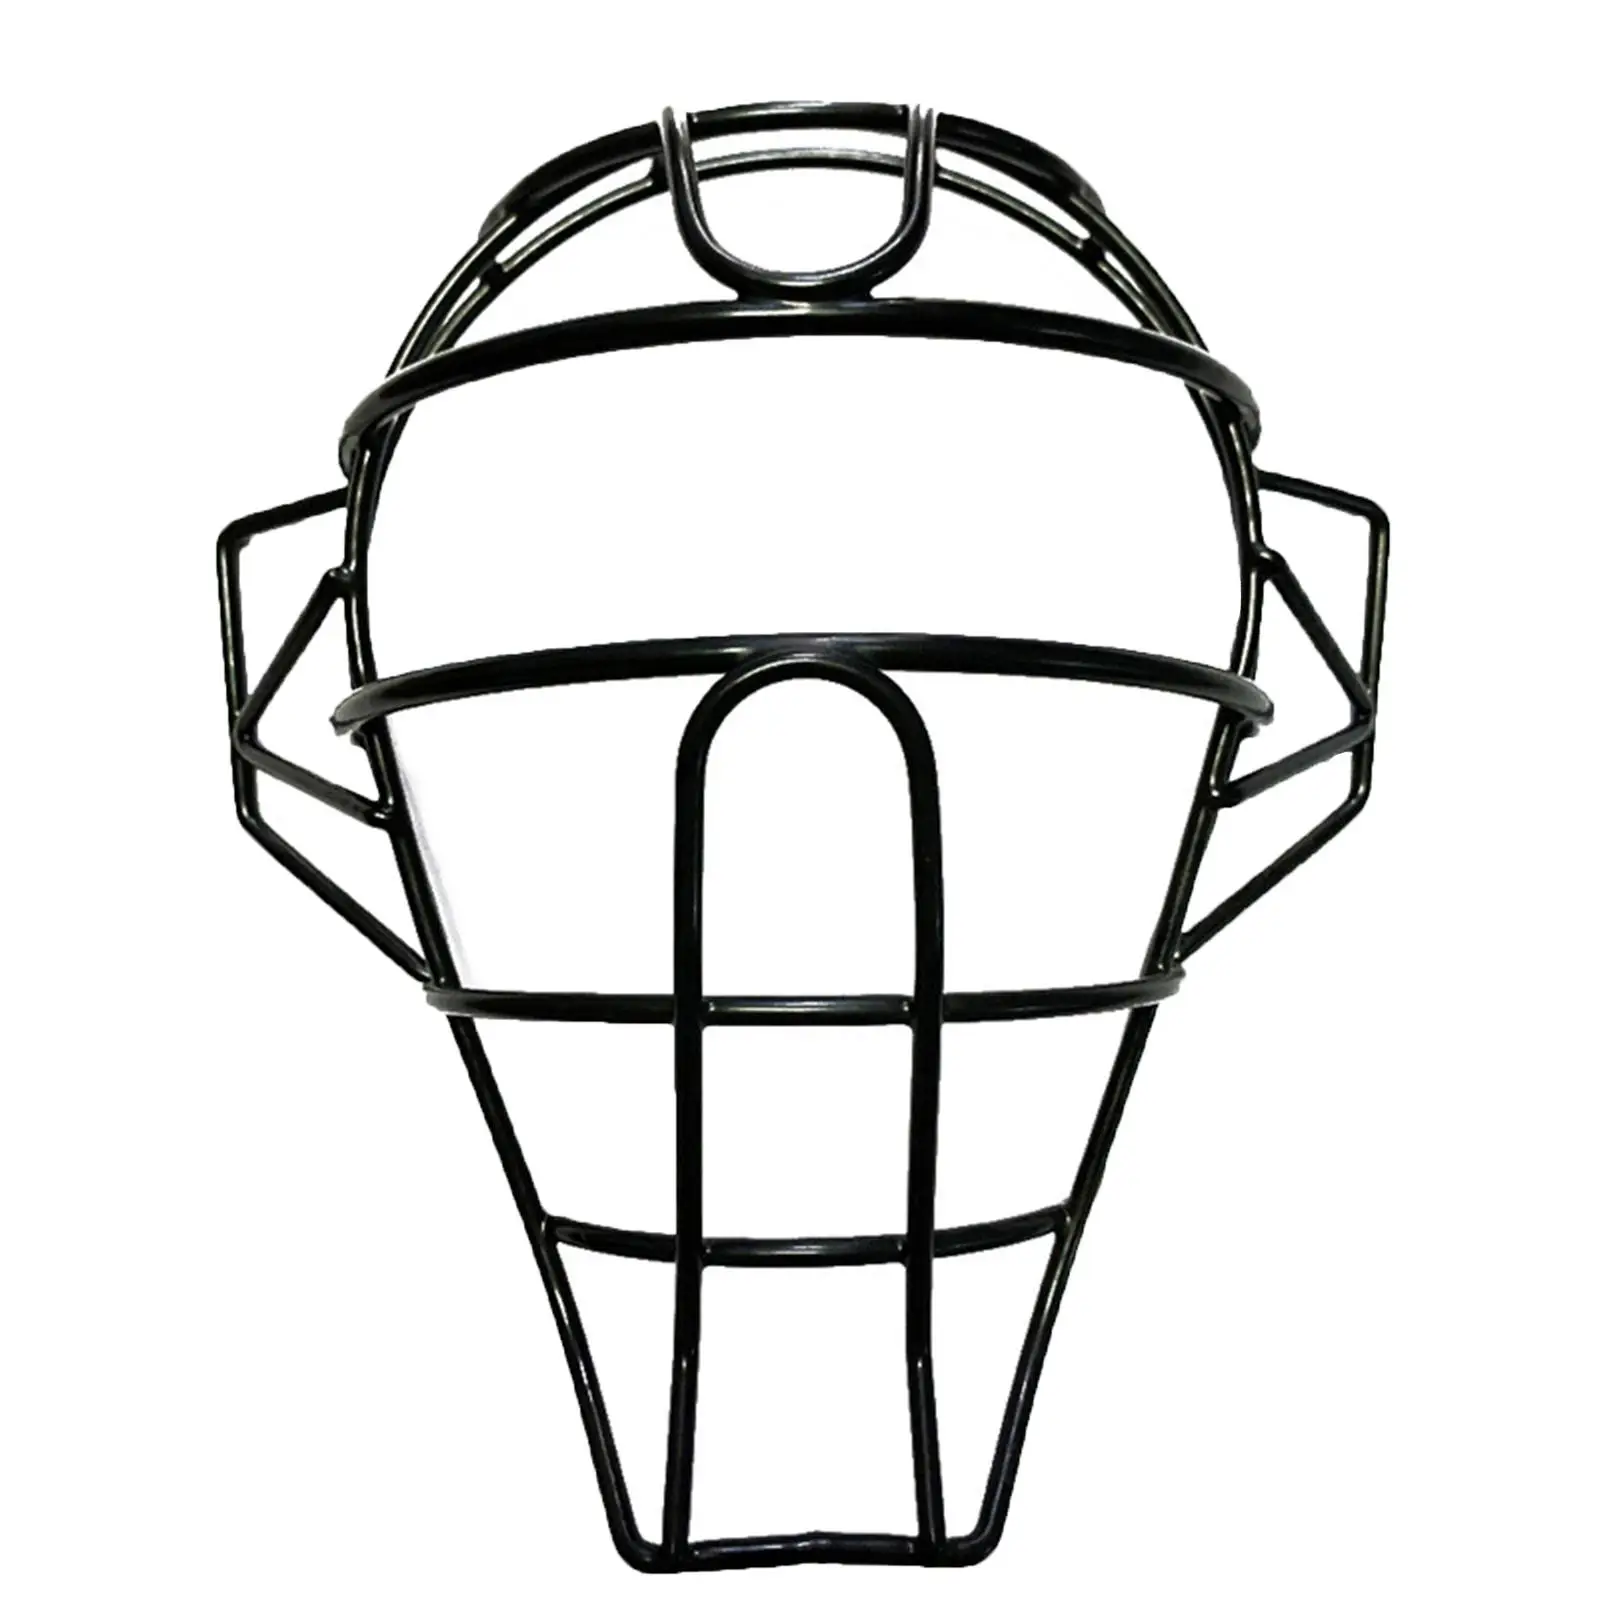 Universal Helmet Face Guard Softball Baseball Protection Equipment Wide Mask for Men Sports Junior Women